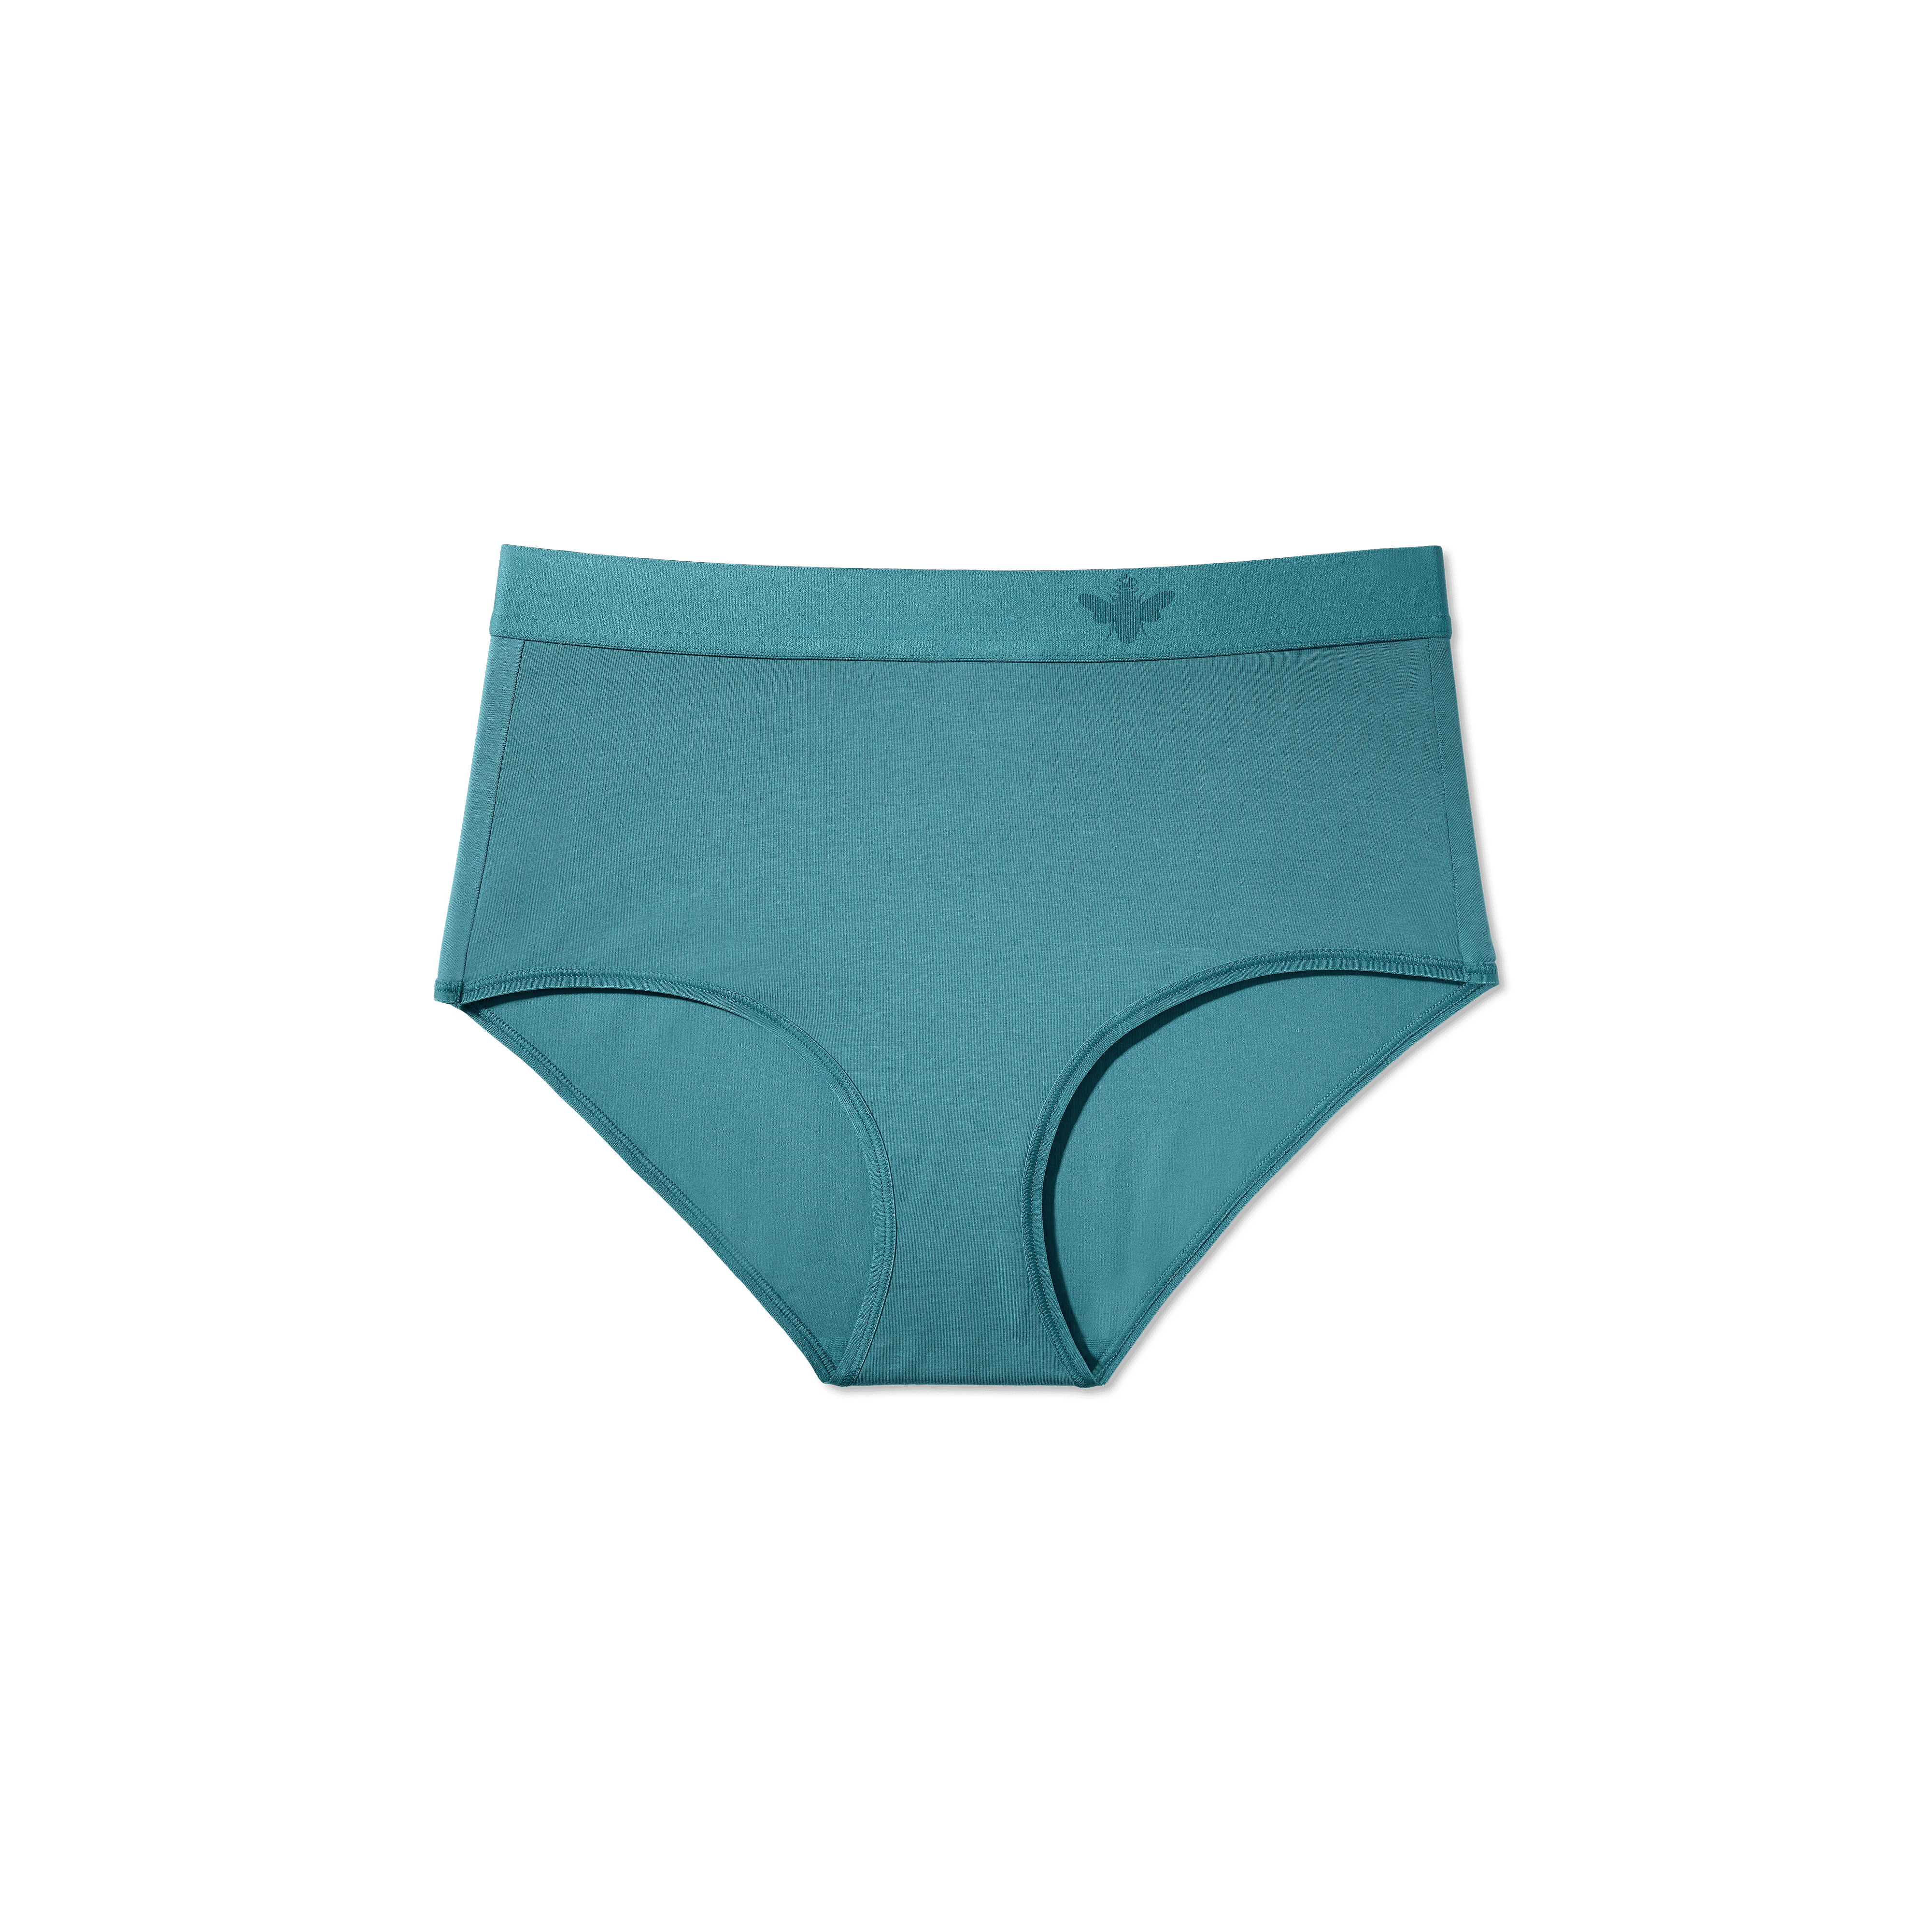 fashion modal breathable sesy underwear for women